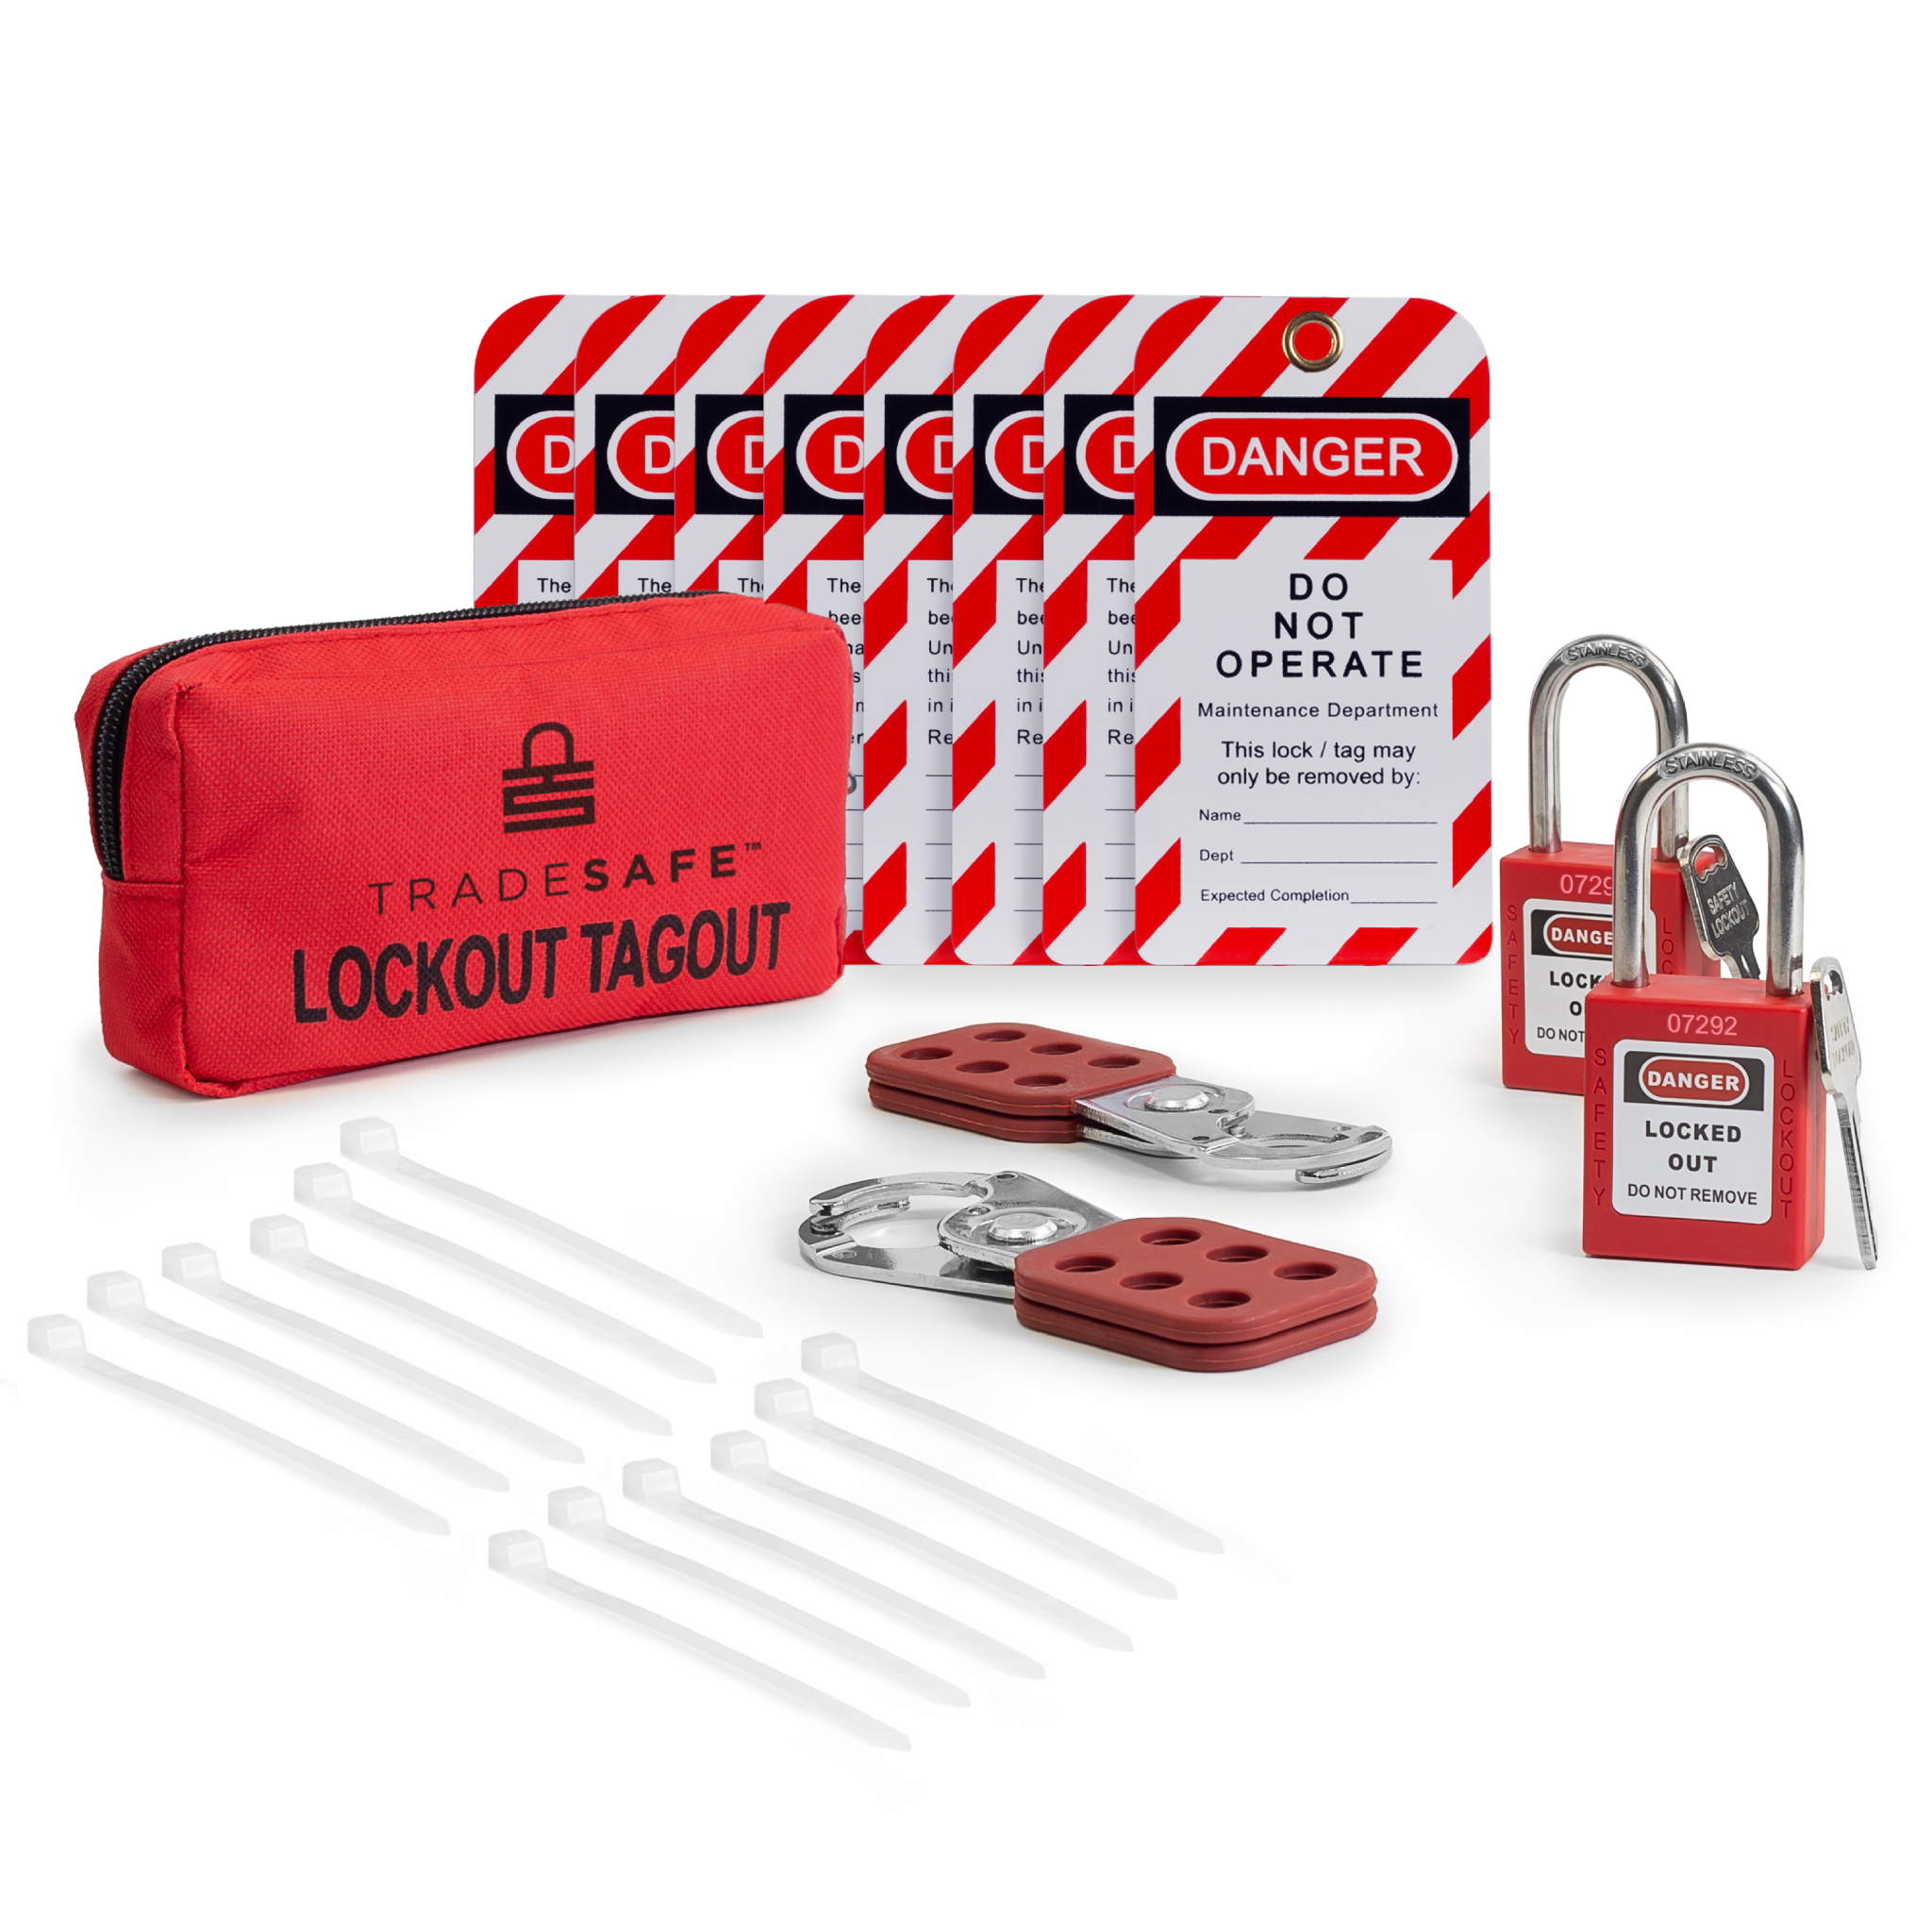 Personal Lockout/Tagout (LOTO) Kit